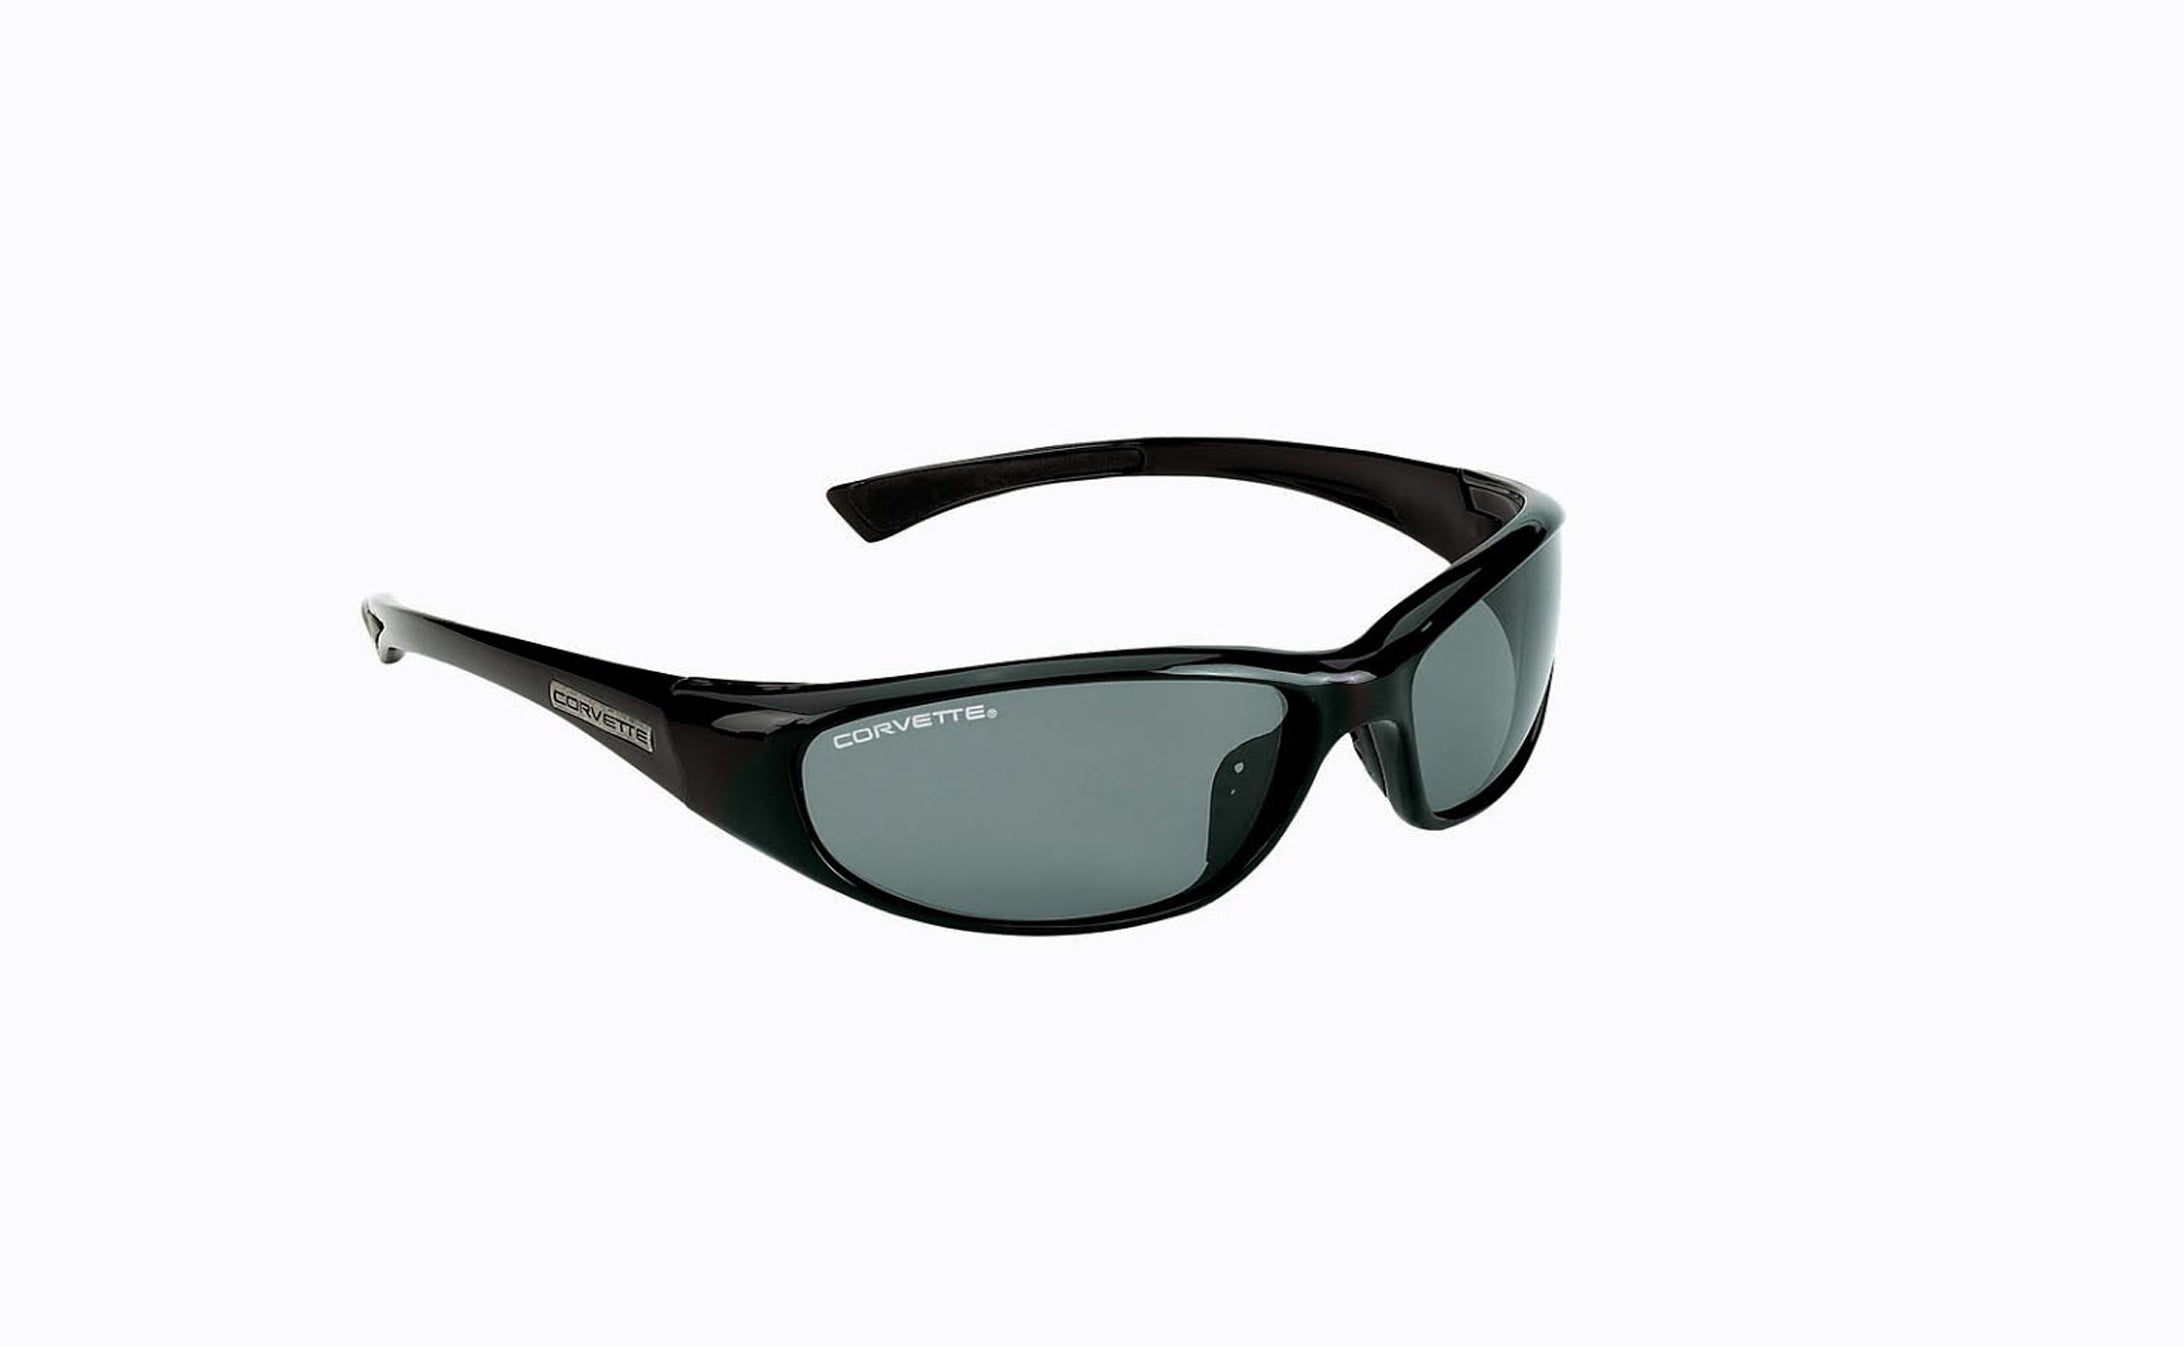 Corvette Series Sunglasses Polarized Lens : Smoke